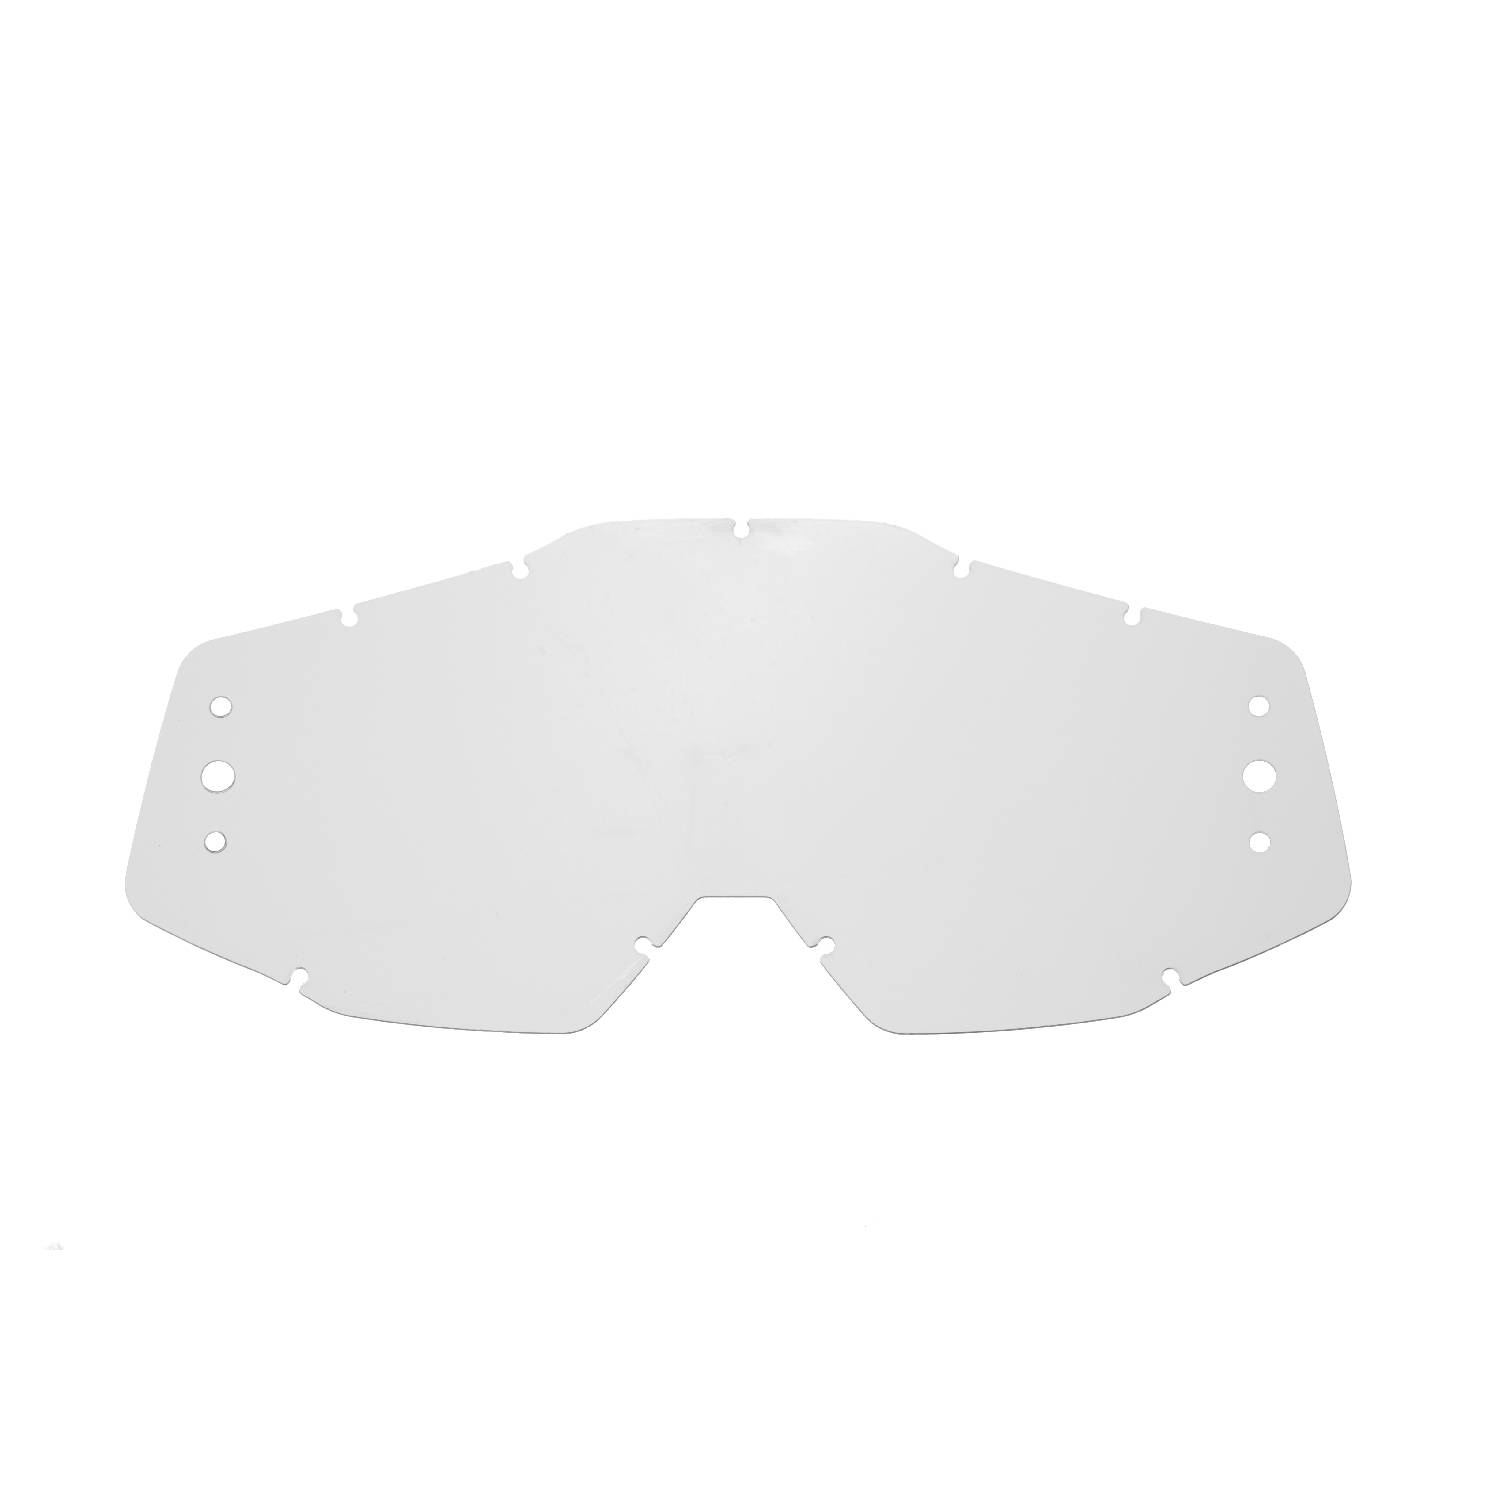 ROLL-OFF transparent lens compatible for 100% Racecraft / Strata / Accuri / Speedlab Vision Sistem cross goggles